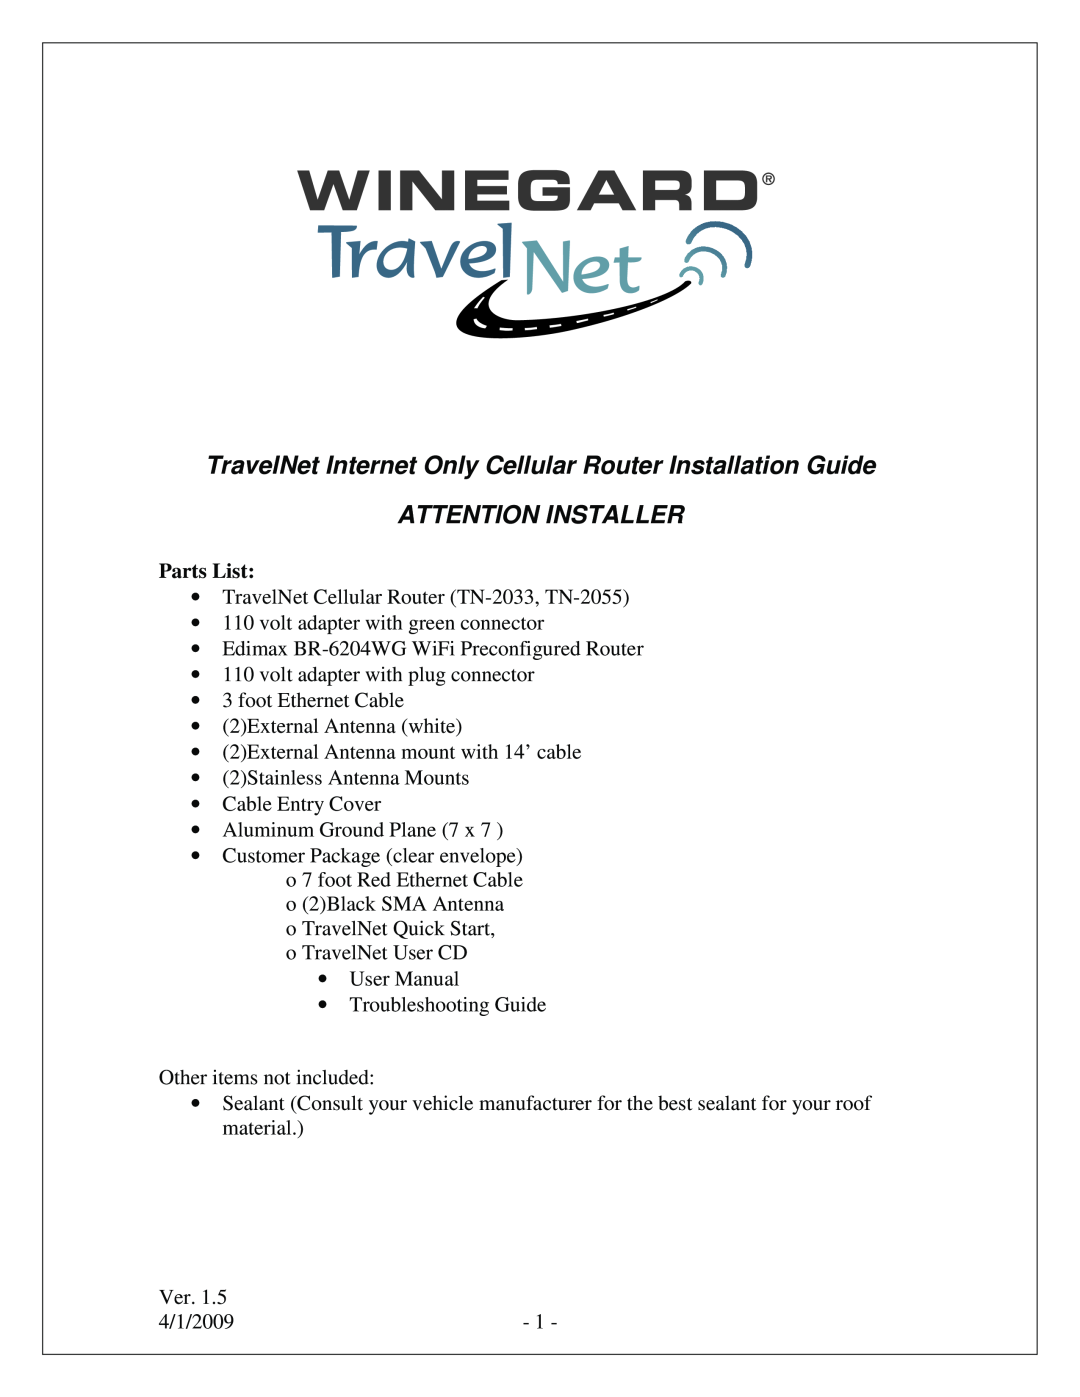 Winegard TN-2033 quick start TravelNet Internet Only Cellular Router Installation Guide, Attention Installer, Parts List 